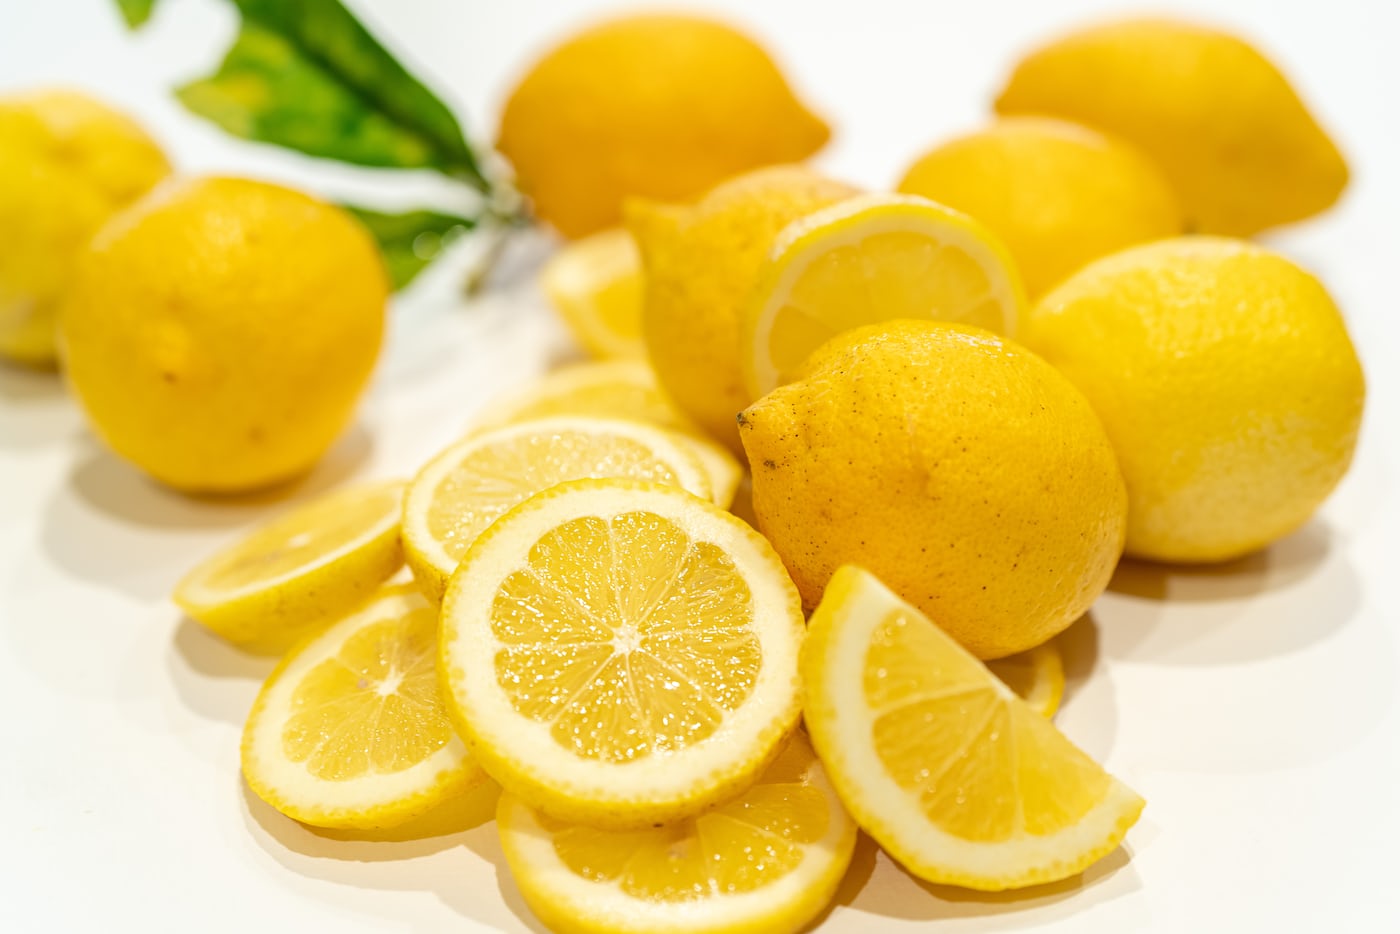 Lemon: The Versatile Fruit with Many Health Benefits